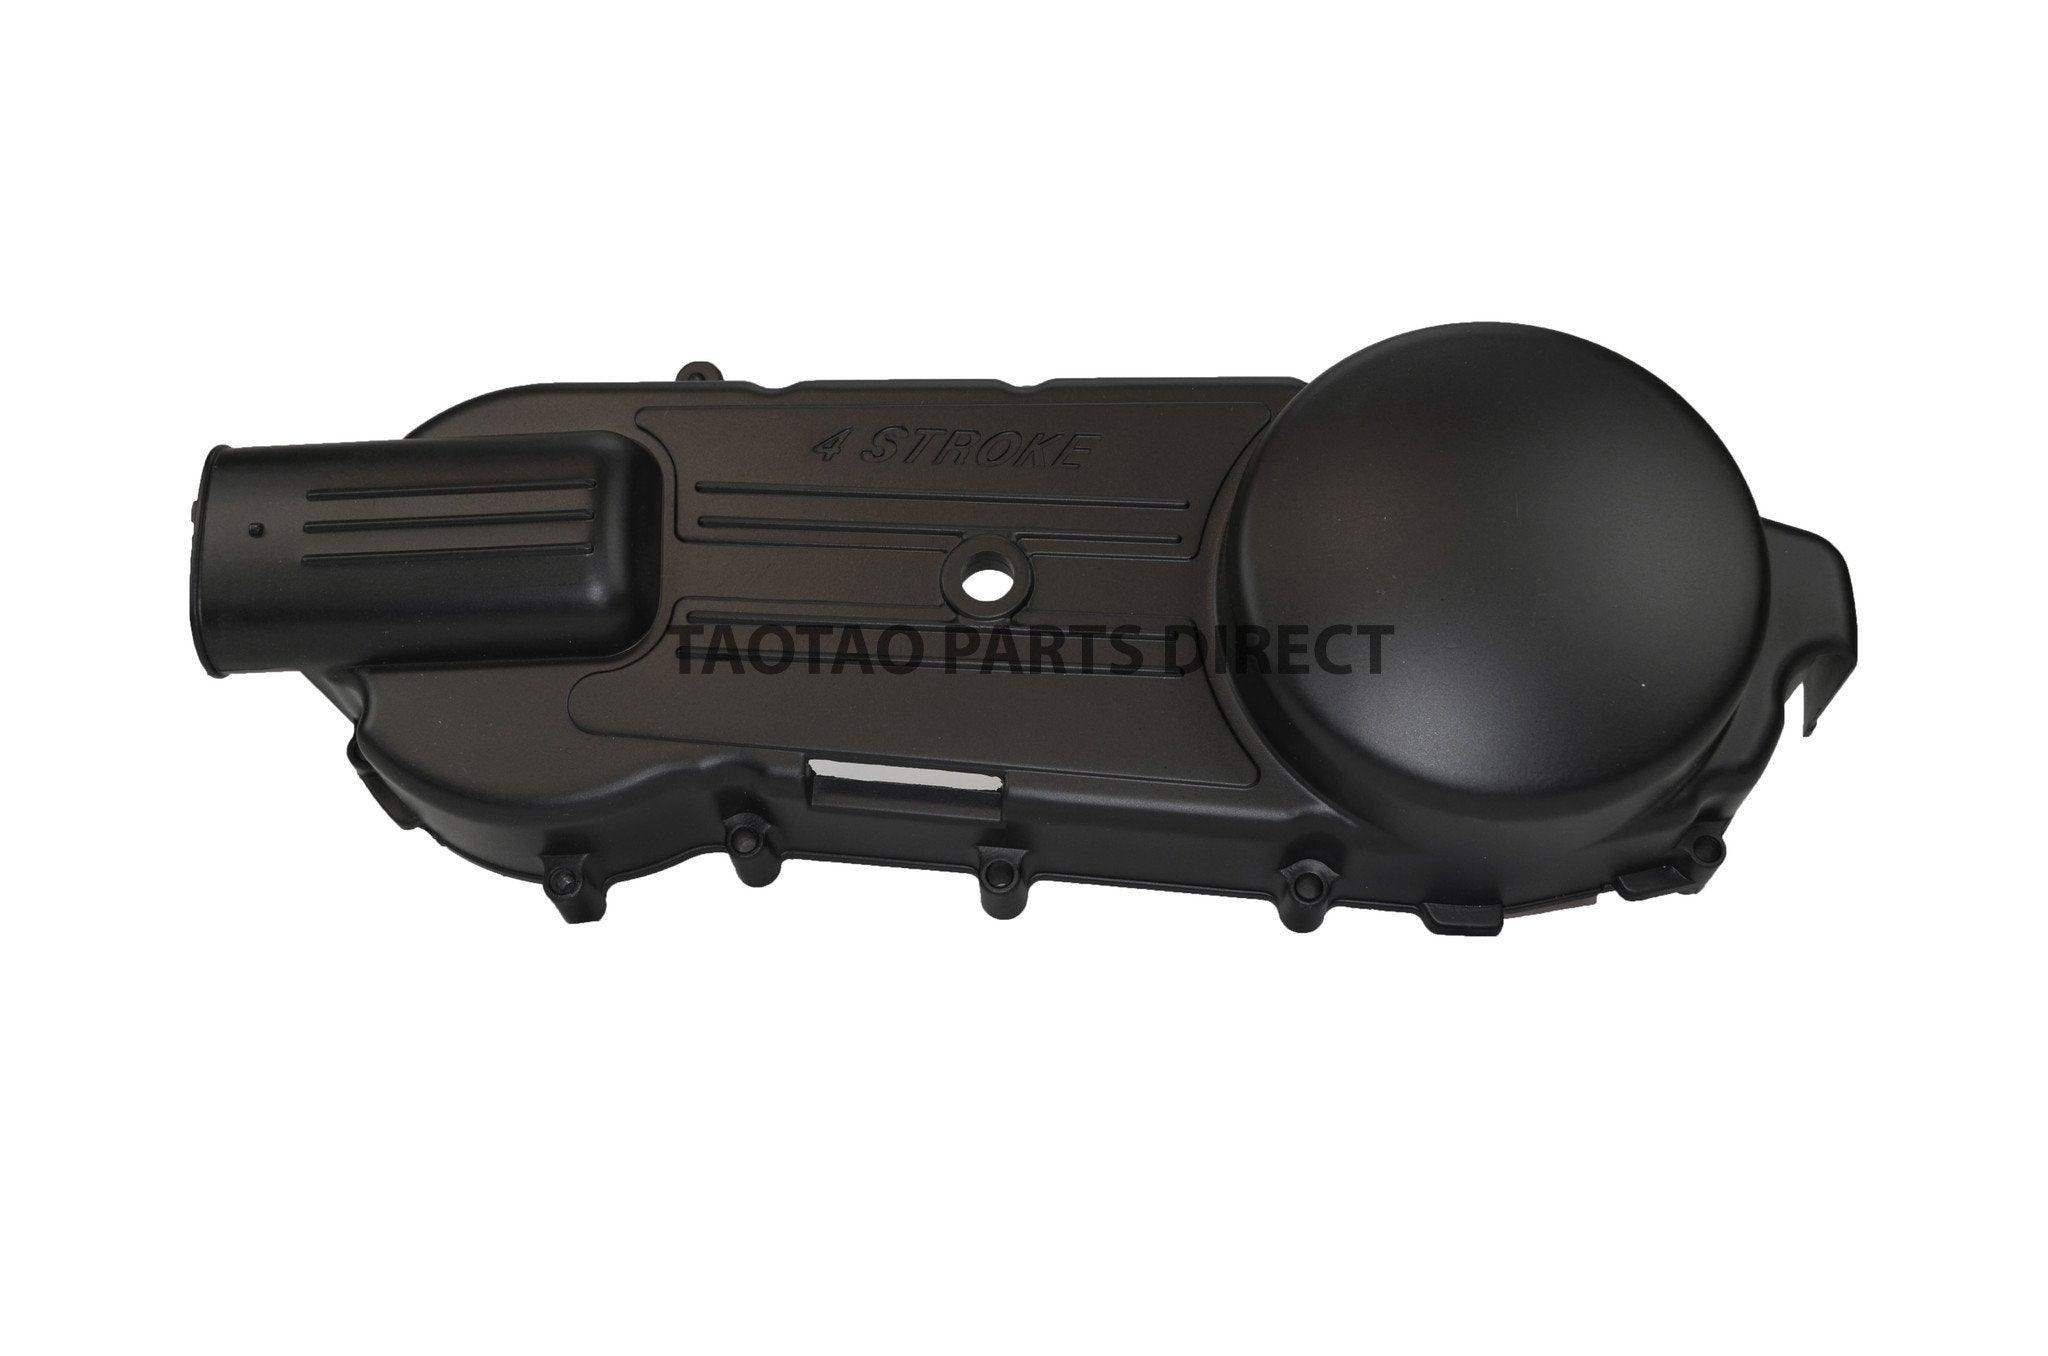 150cc CVT Cover - TaoTaoPartsDirect.com